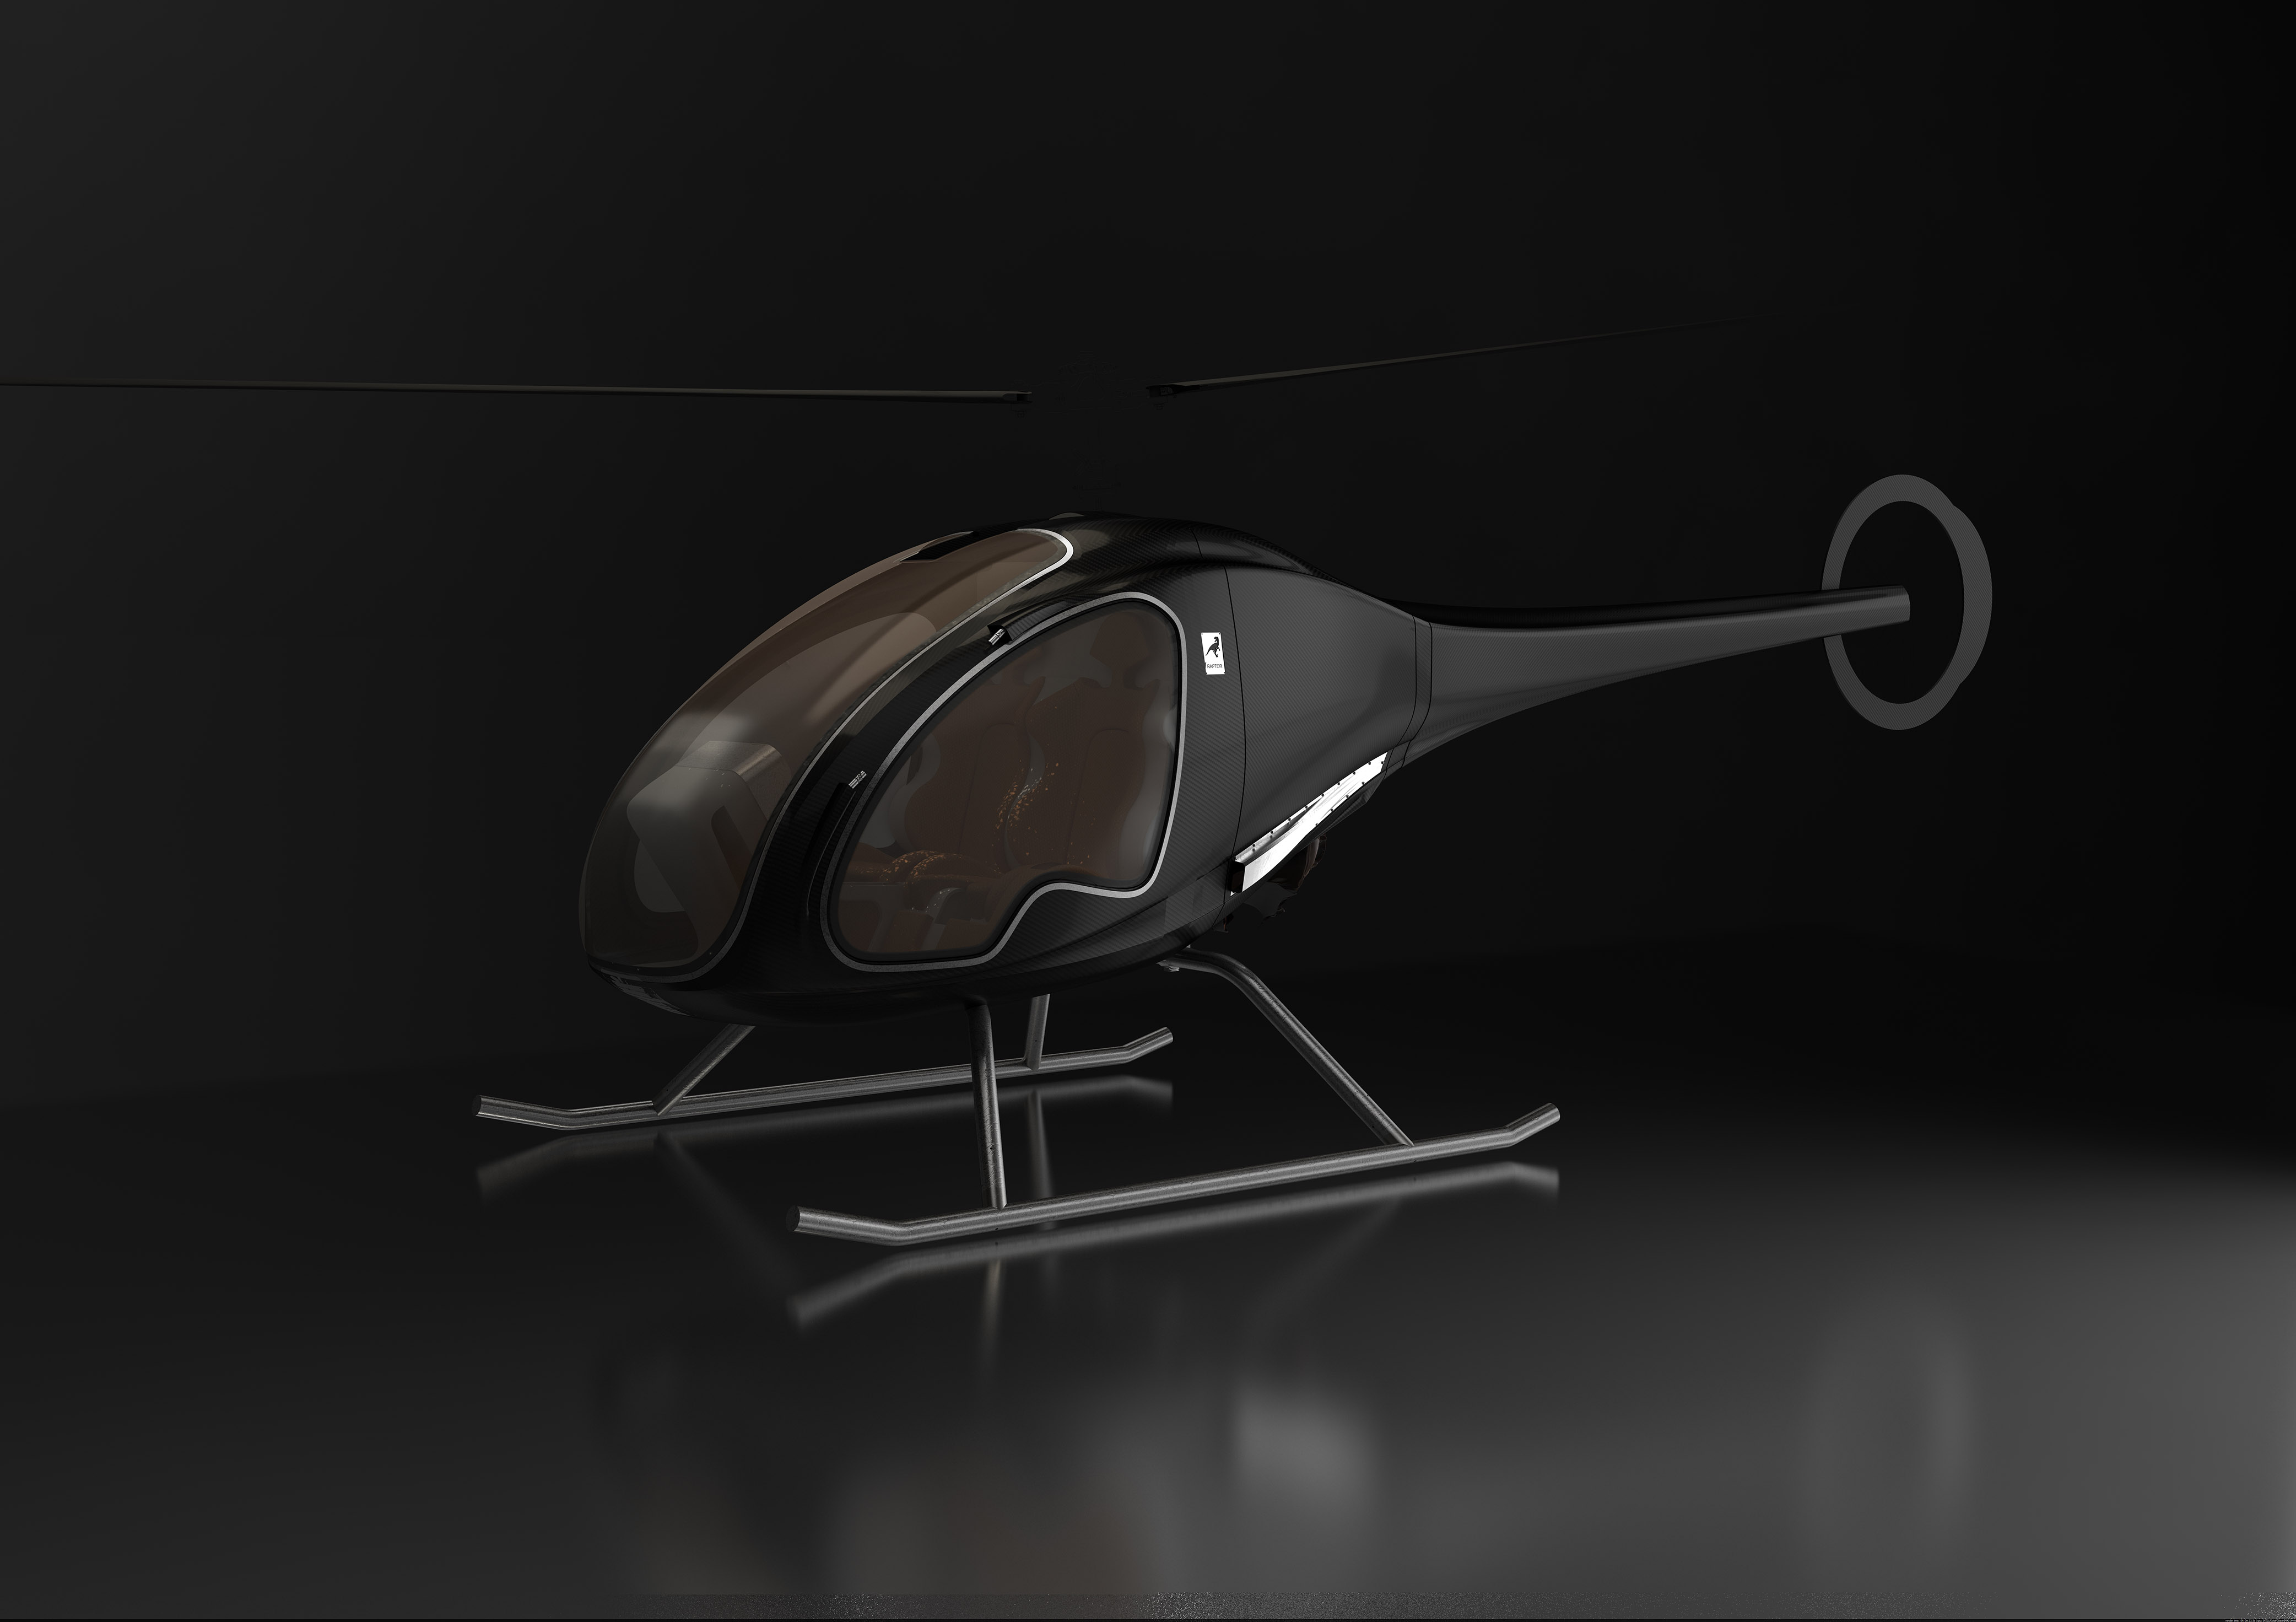 piranha turbine helicopter